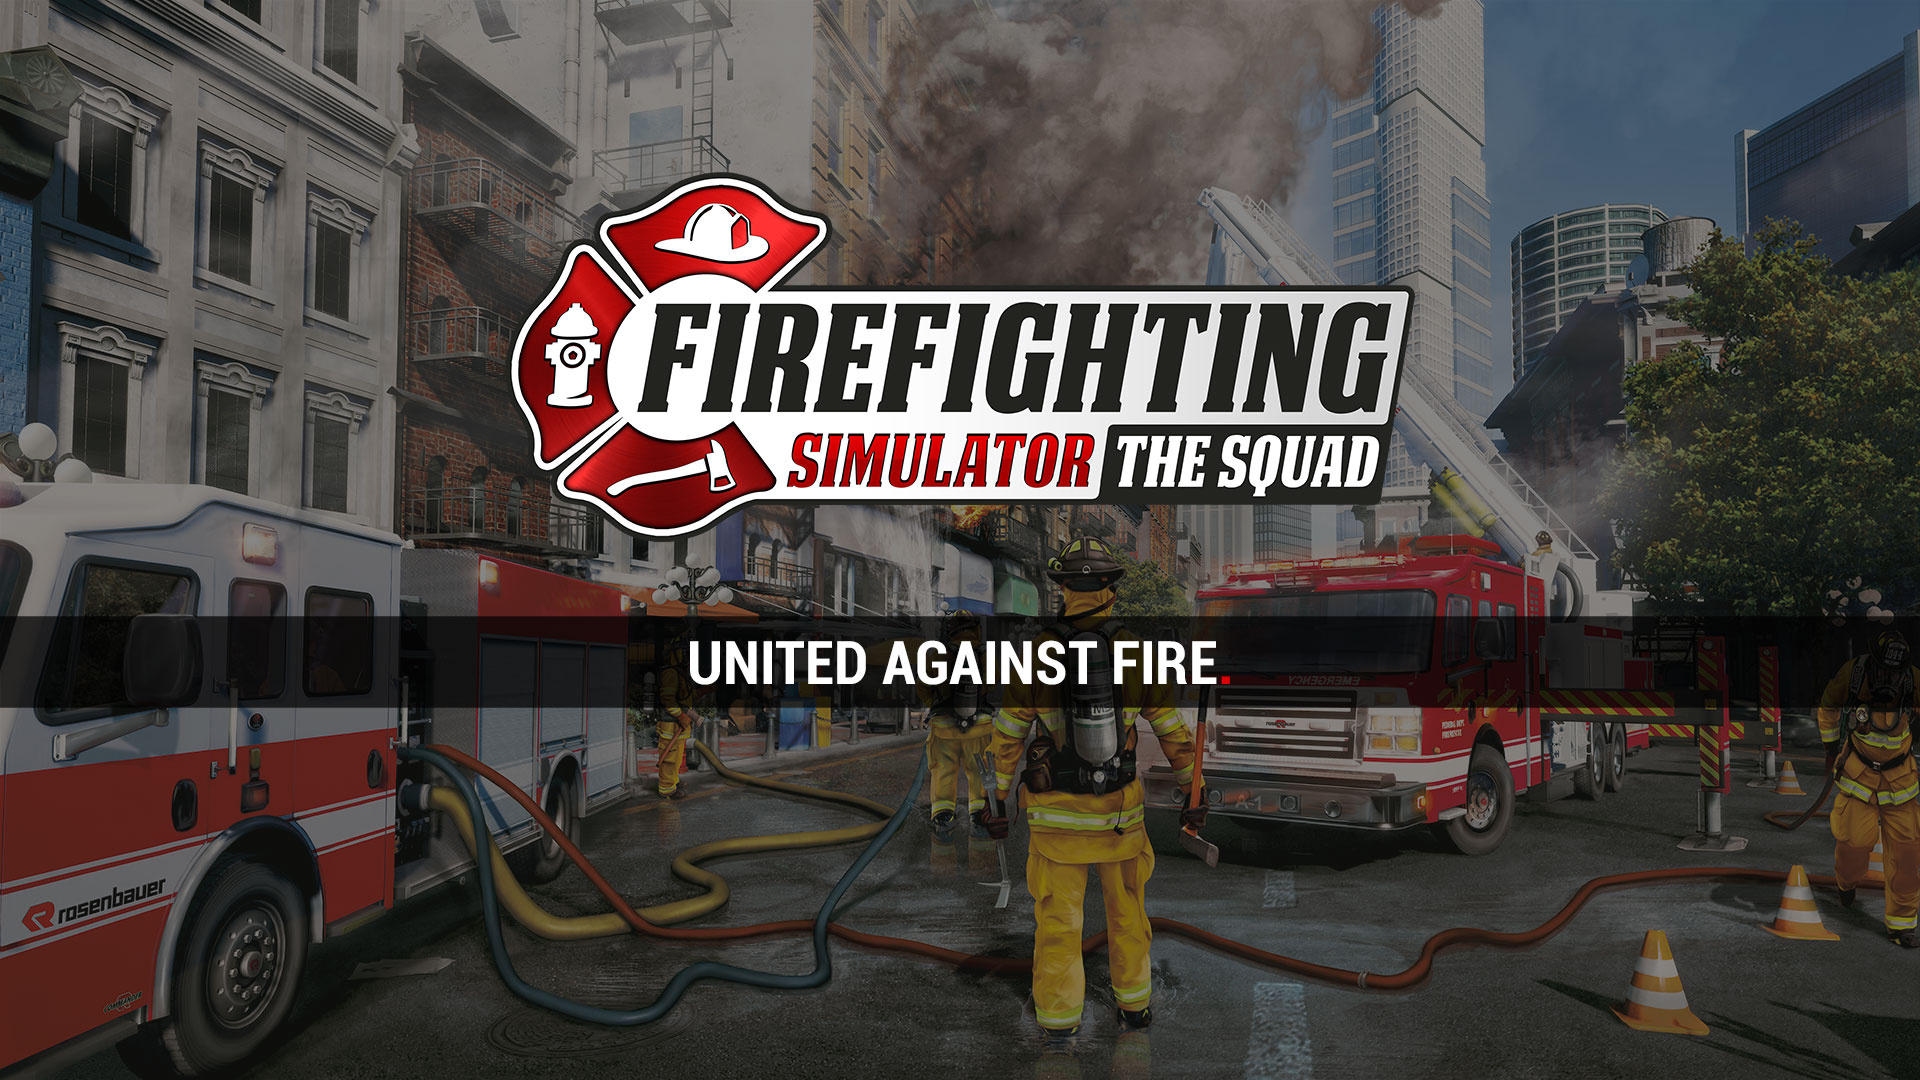 Firefighting Simulator